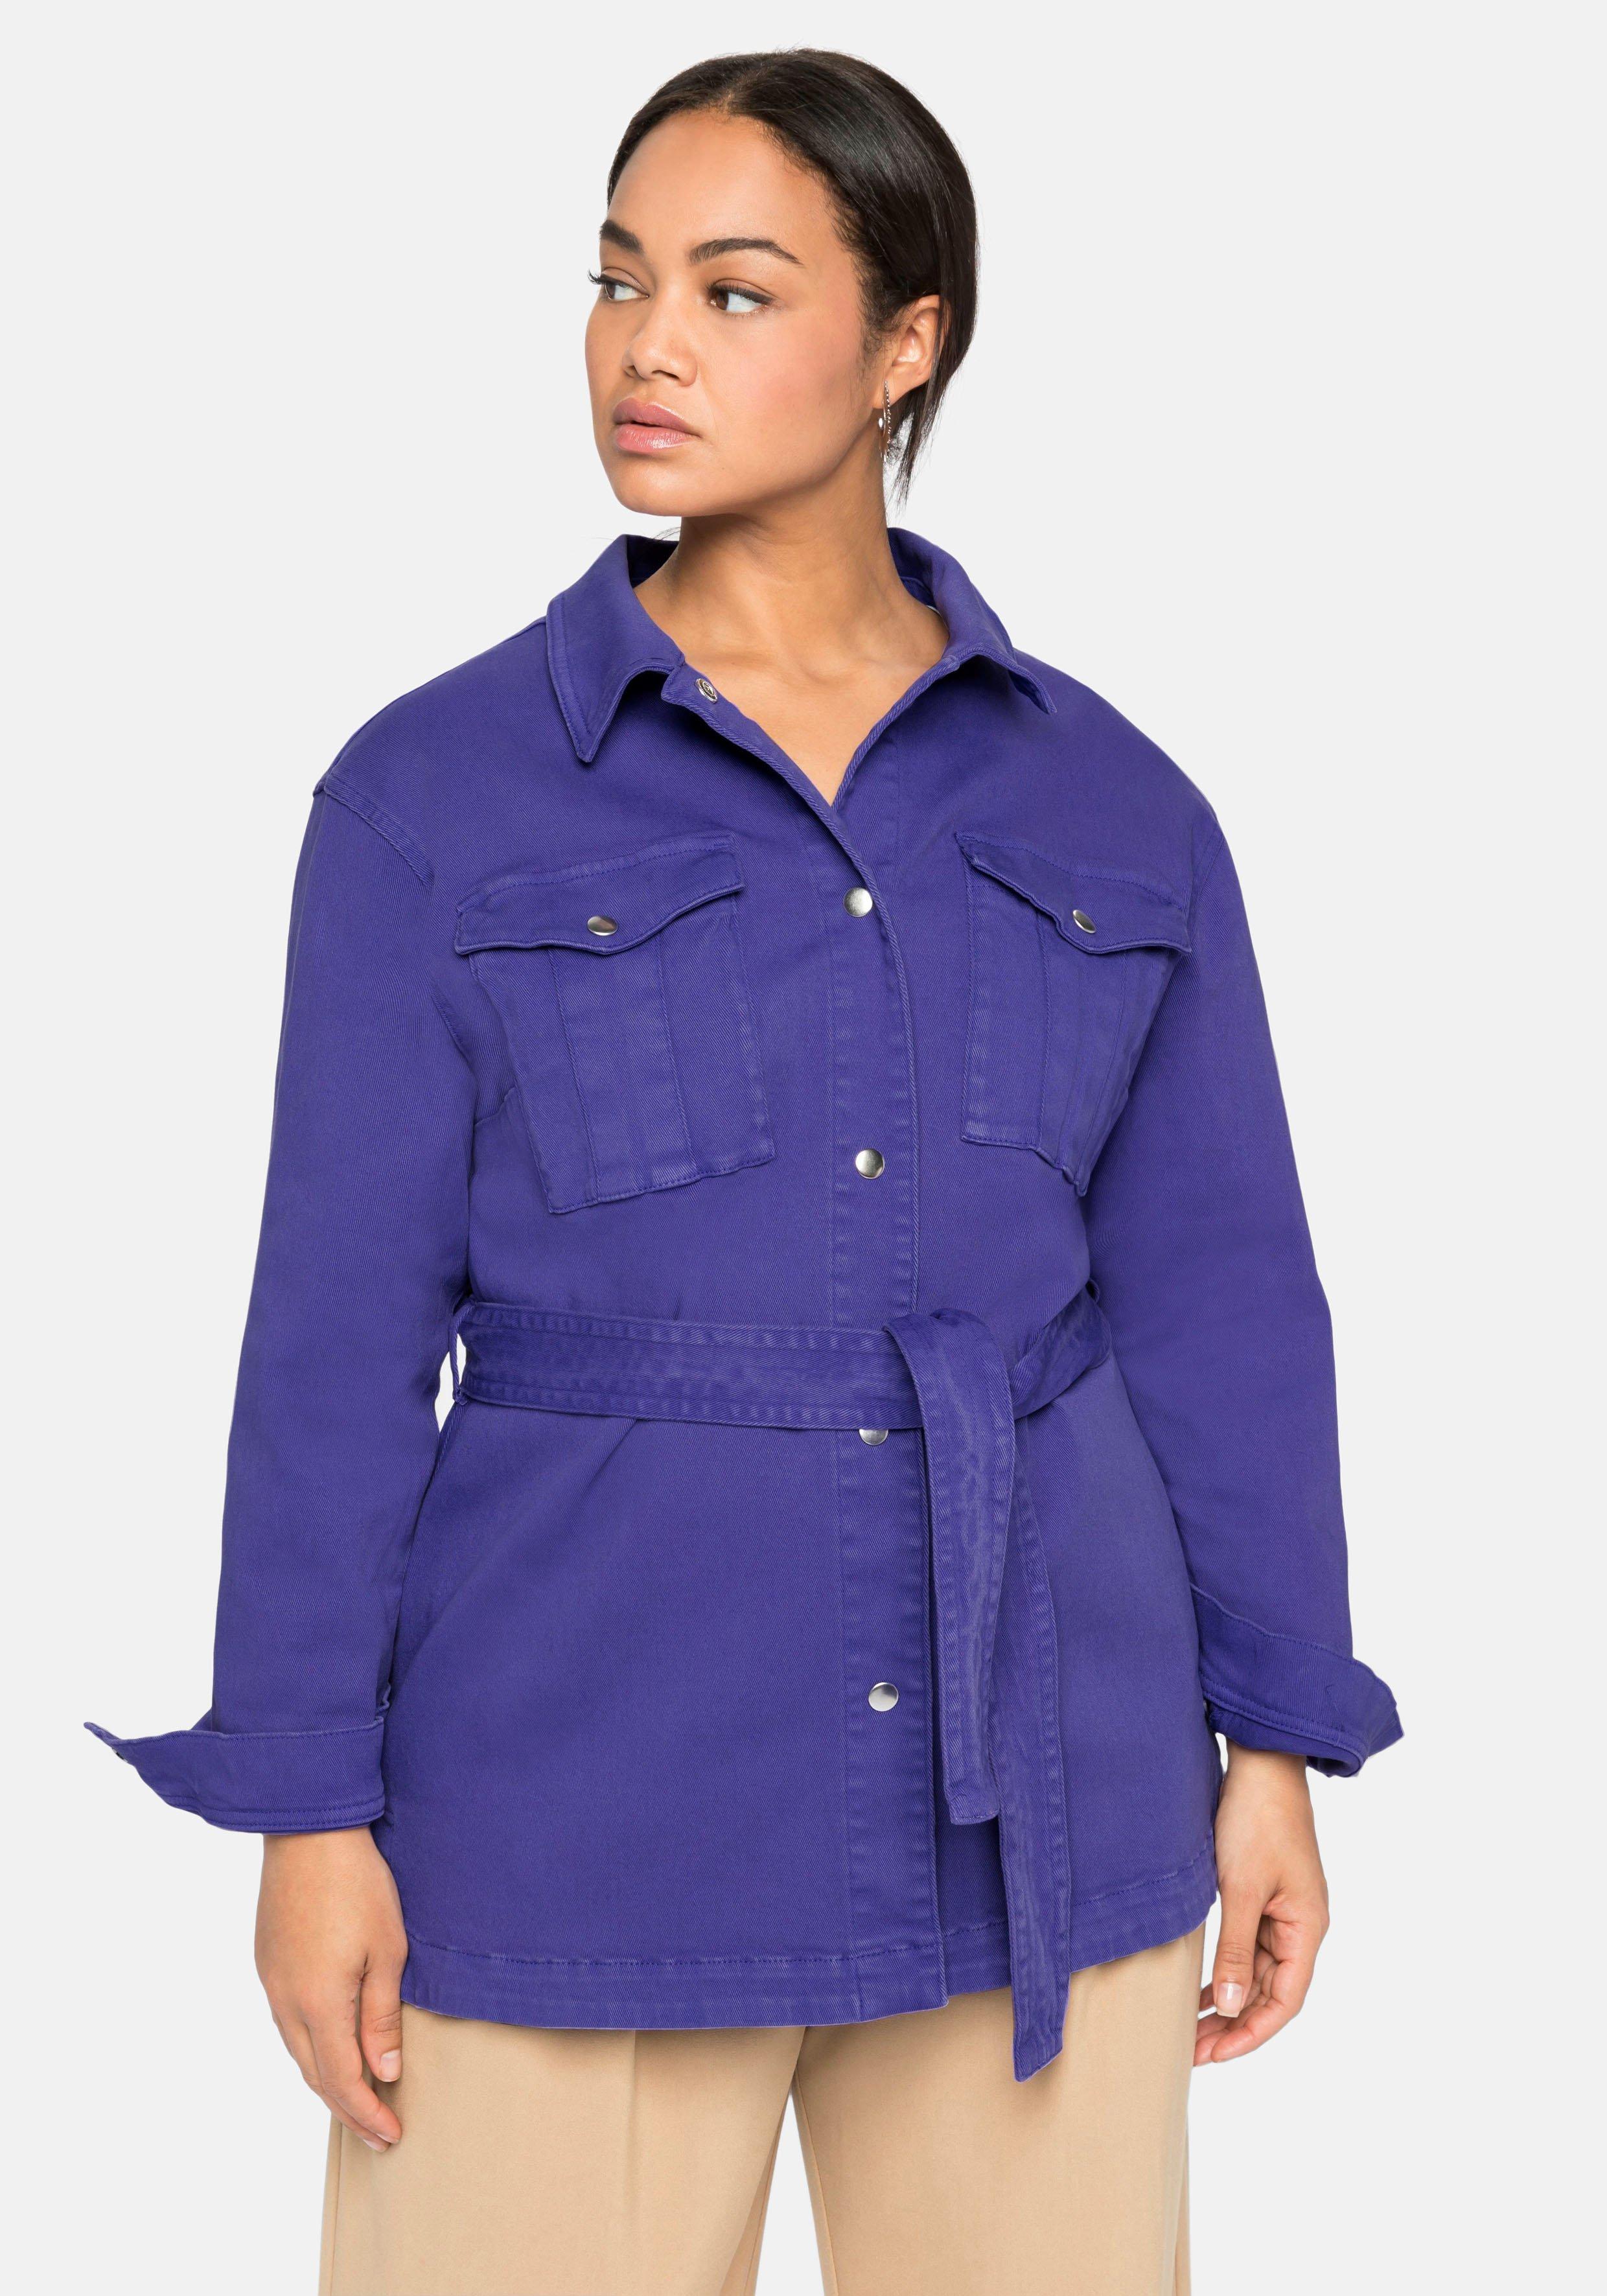 Jeansjacke im Hemdblusen-Stil, mit Bindegürtel - violett | sheego